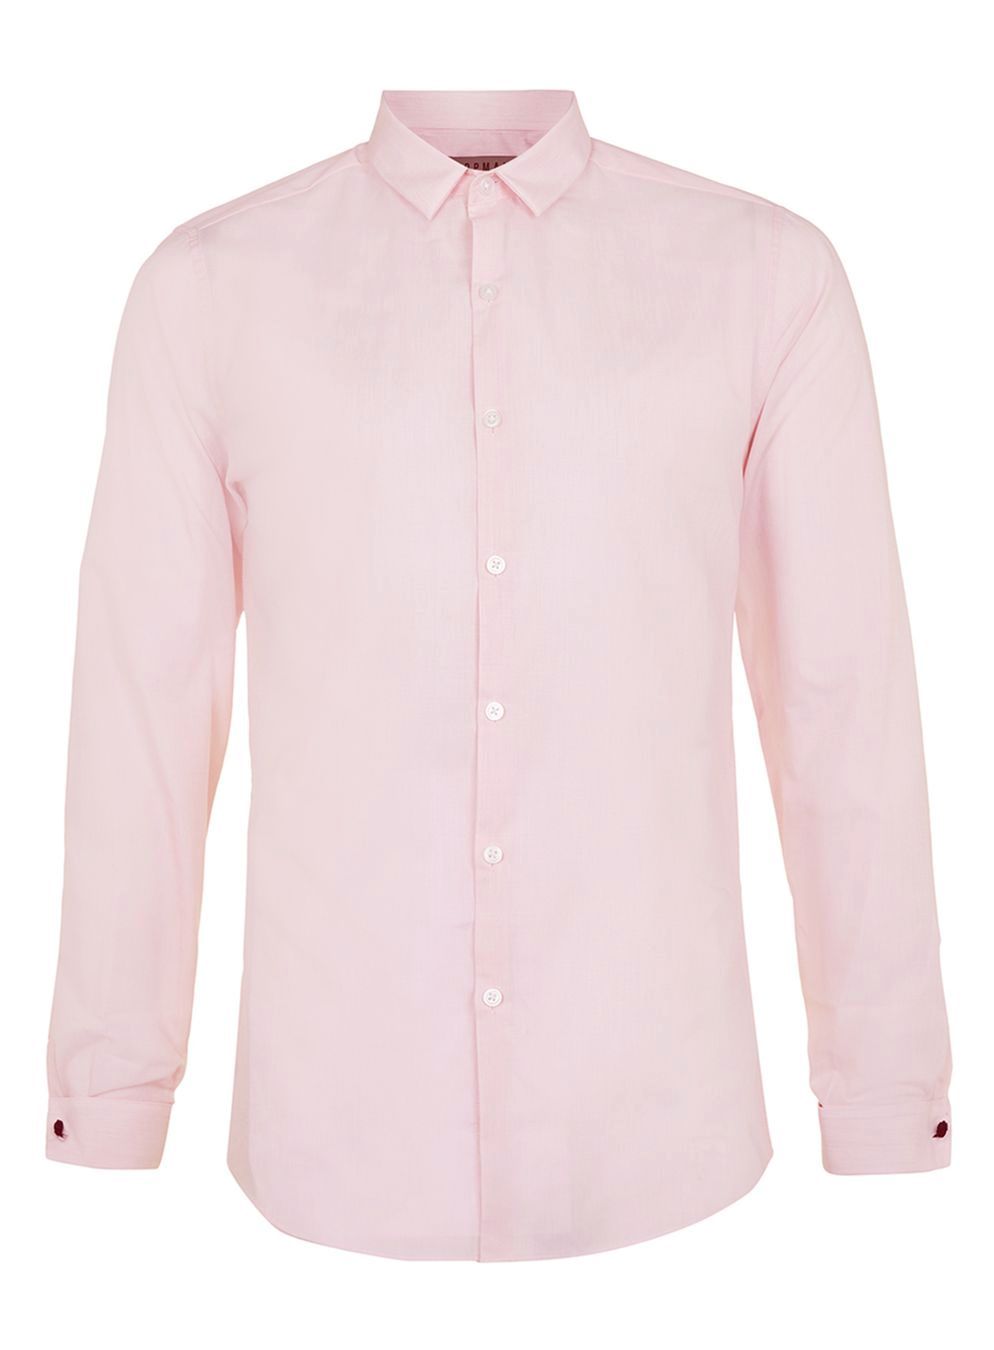 Long Sleeve Pink Slim Fit Shirt Size: L